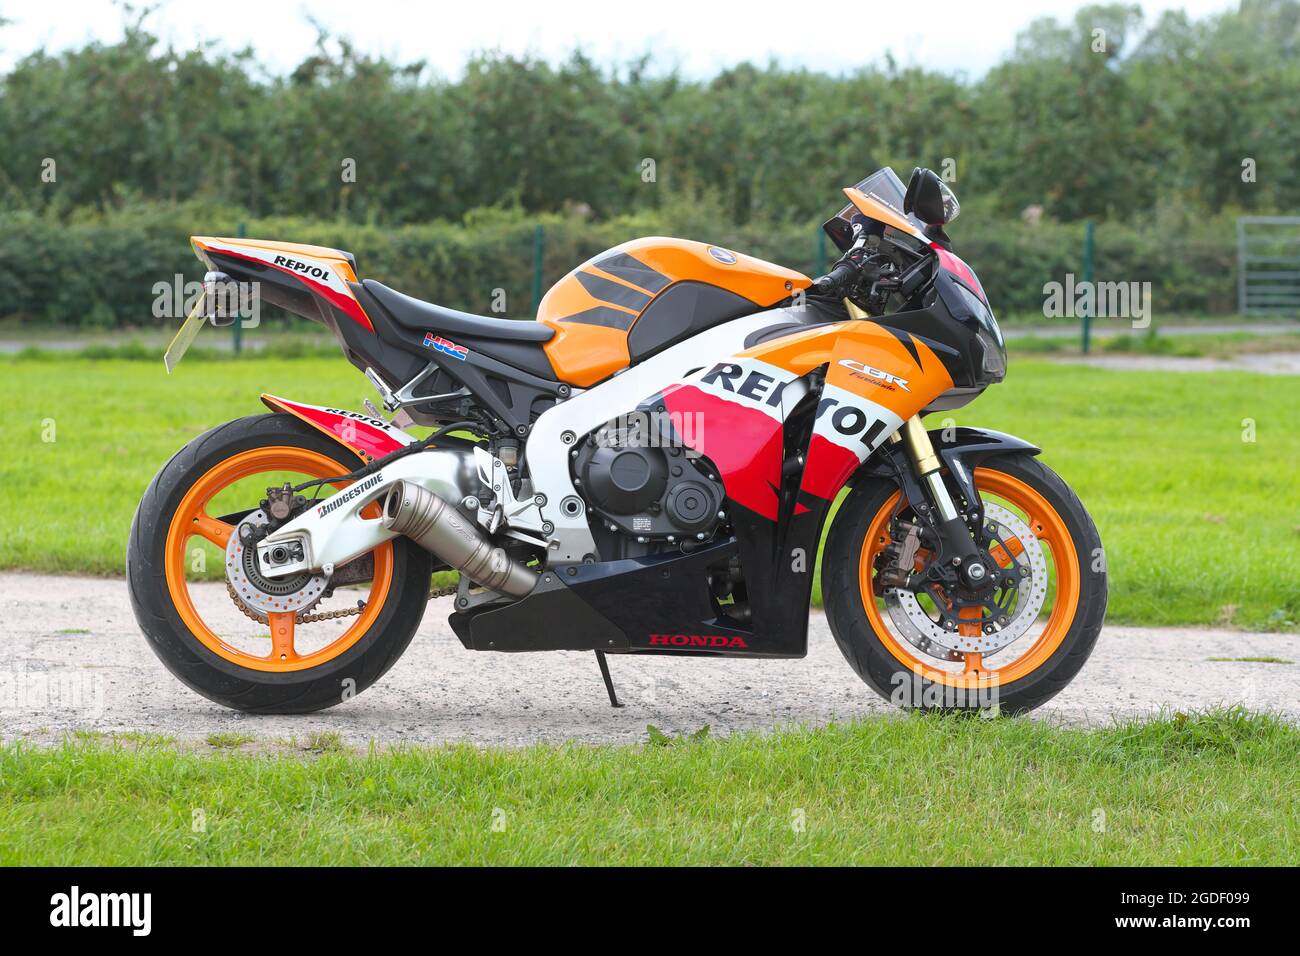 Honda CBR 1000 RR Fireblade Respol réplique moto Banque D'Images